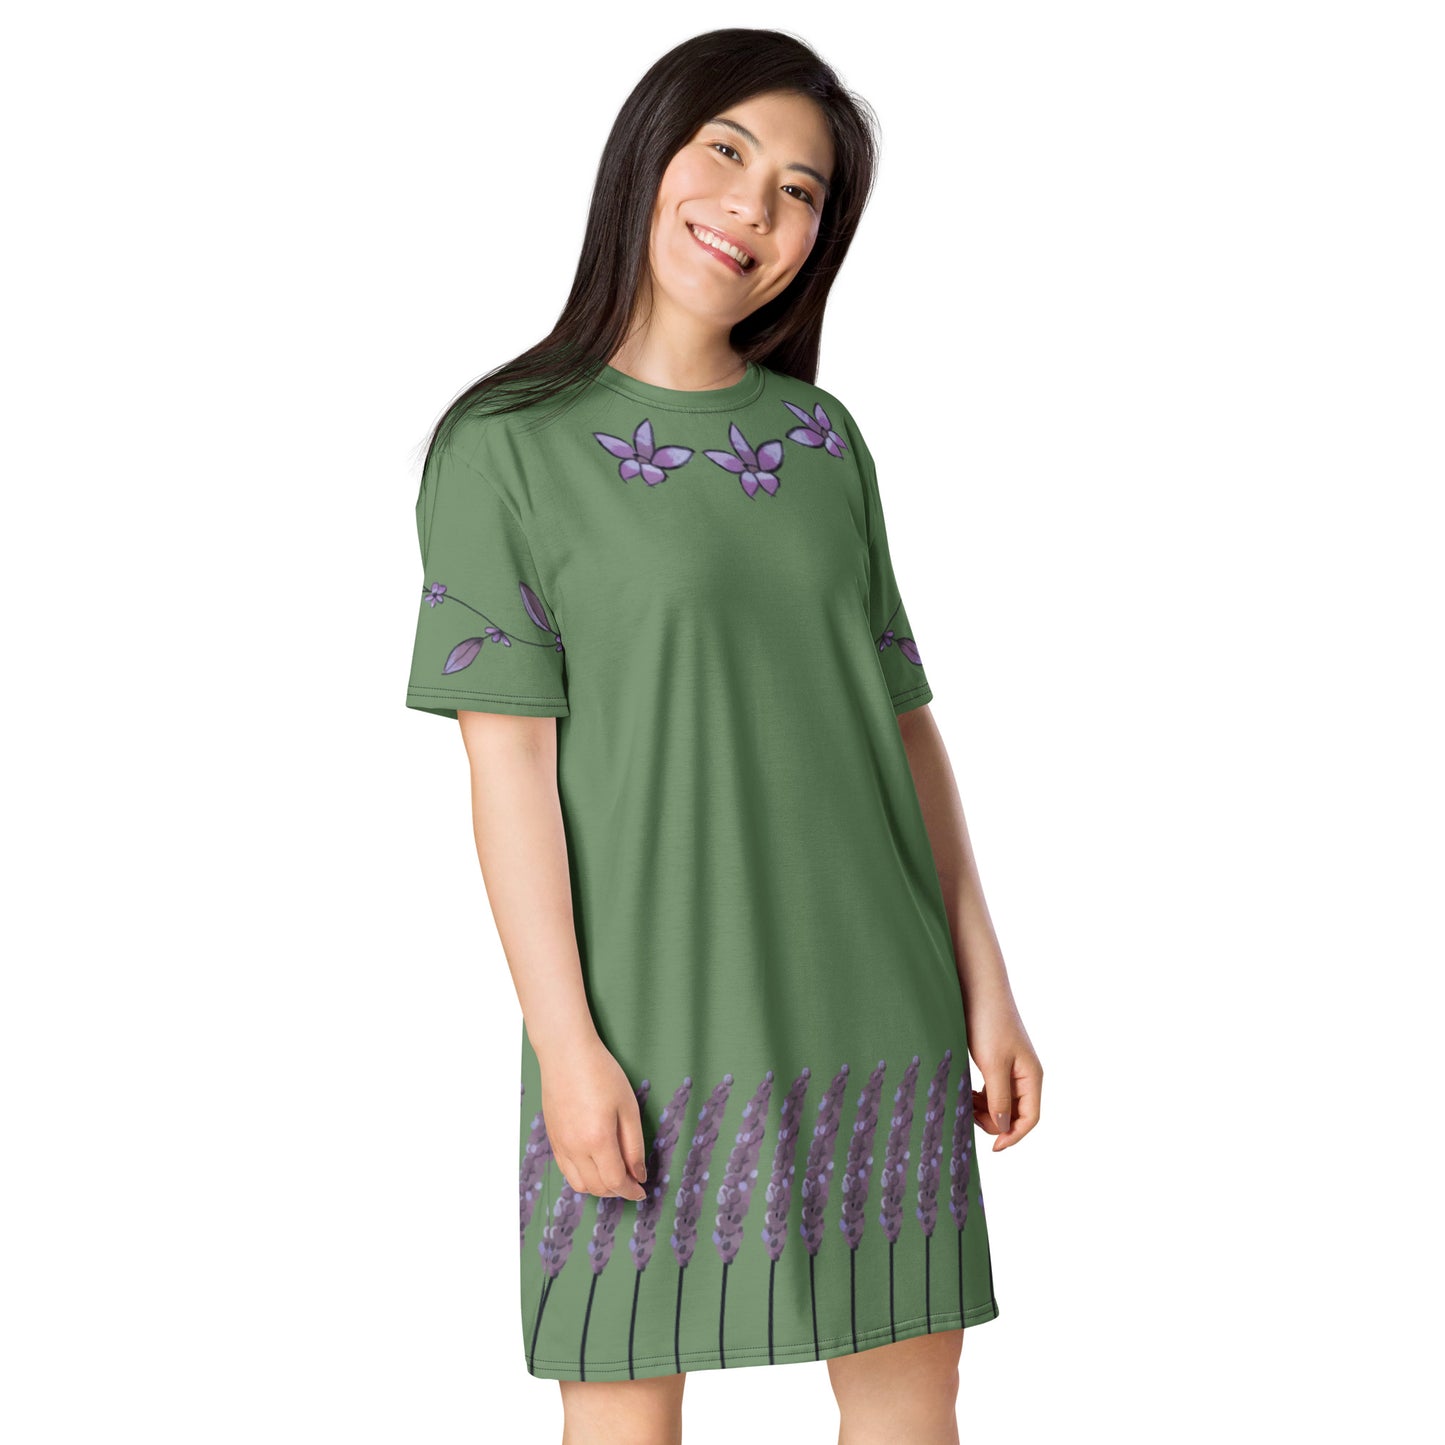 A model wears the Lavender Dreams T-shirt dress.